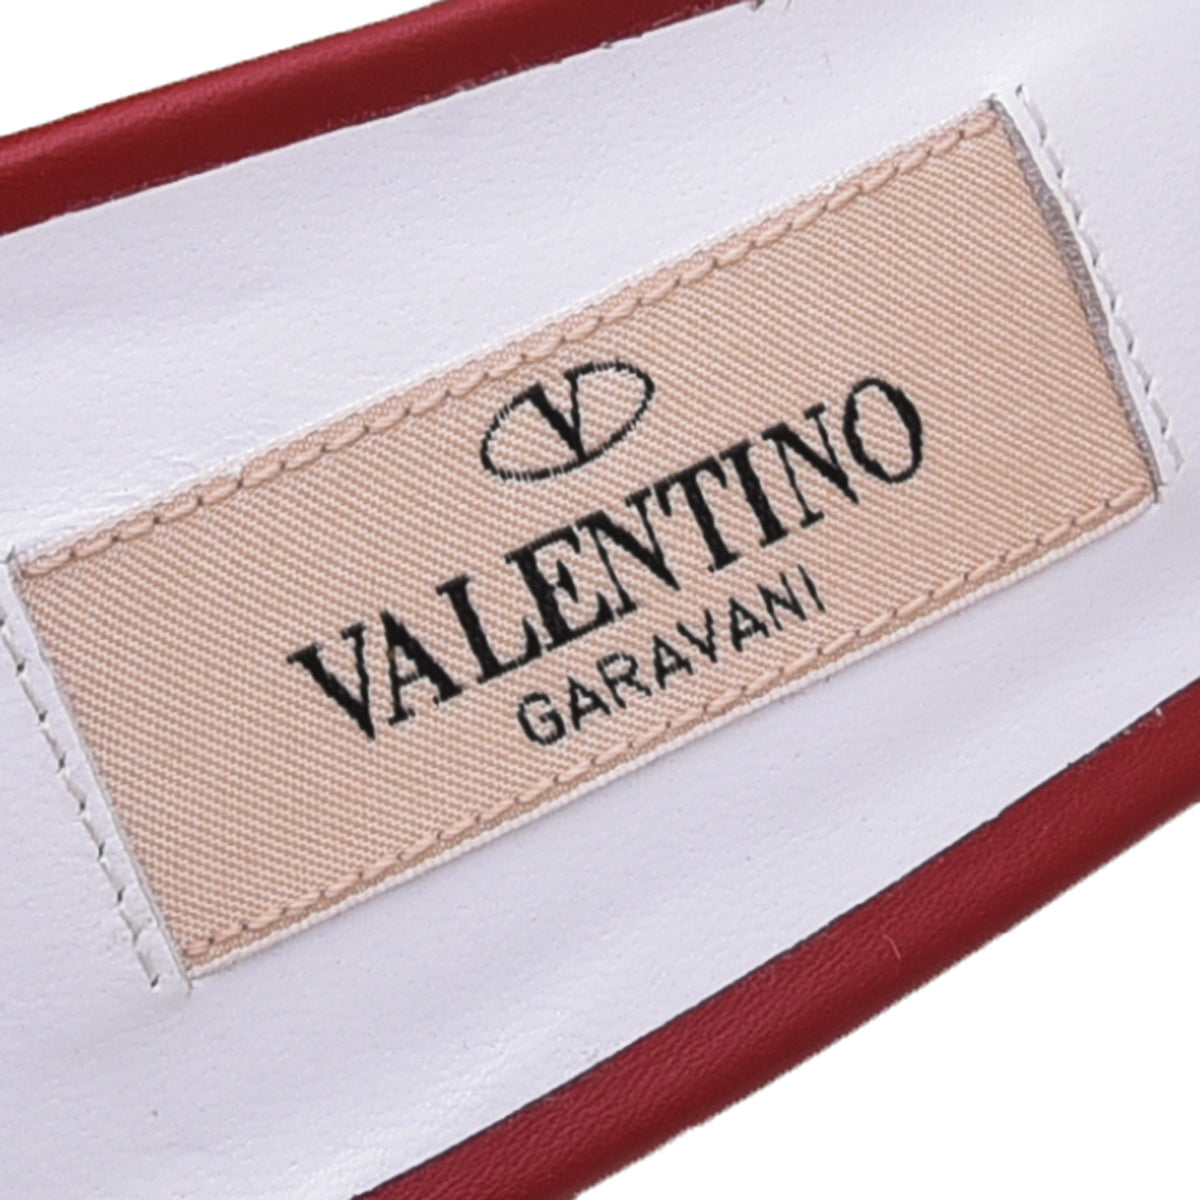 Valentino Bicolor Free Rockstud Crisscross Sandal 36.5